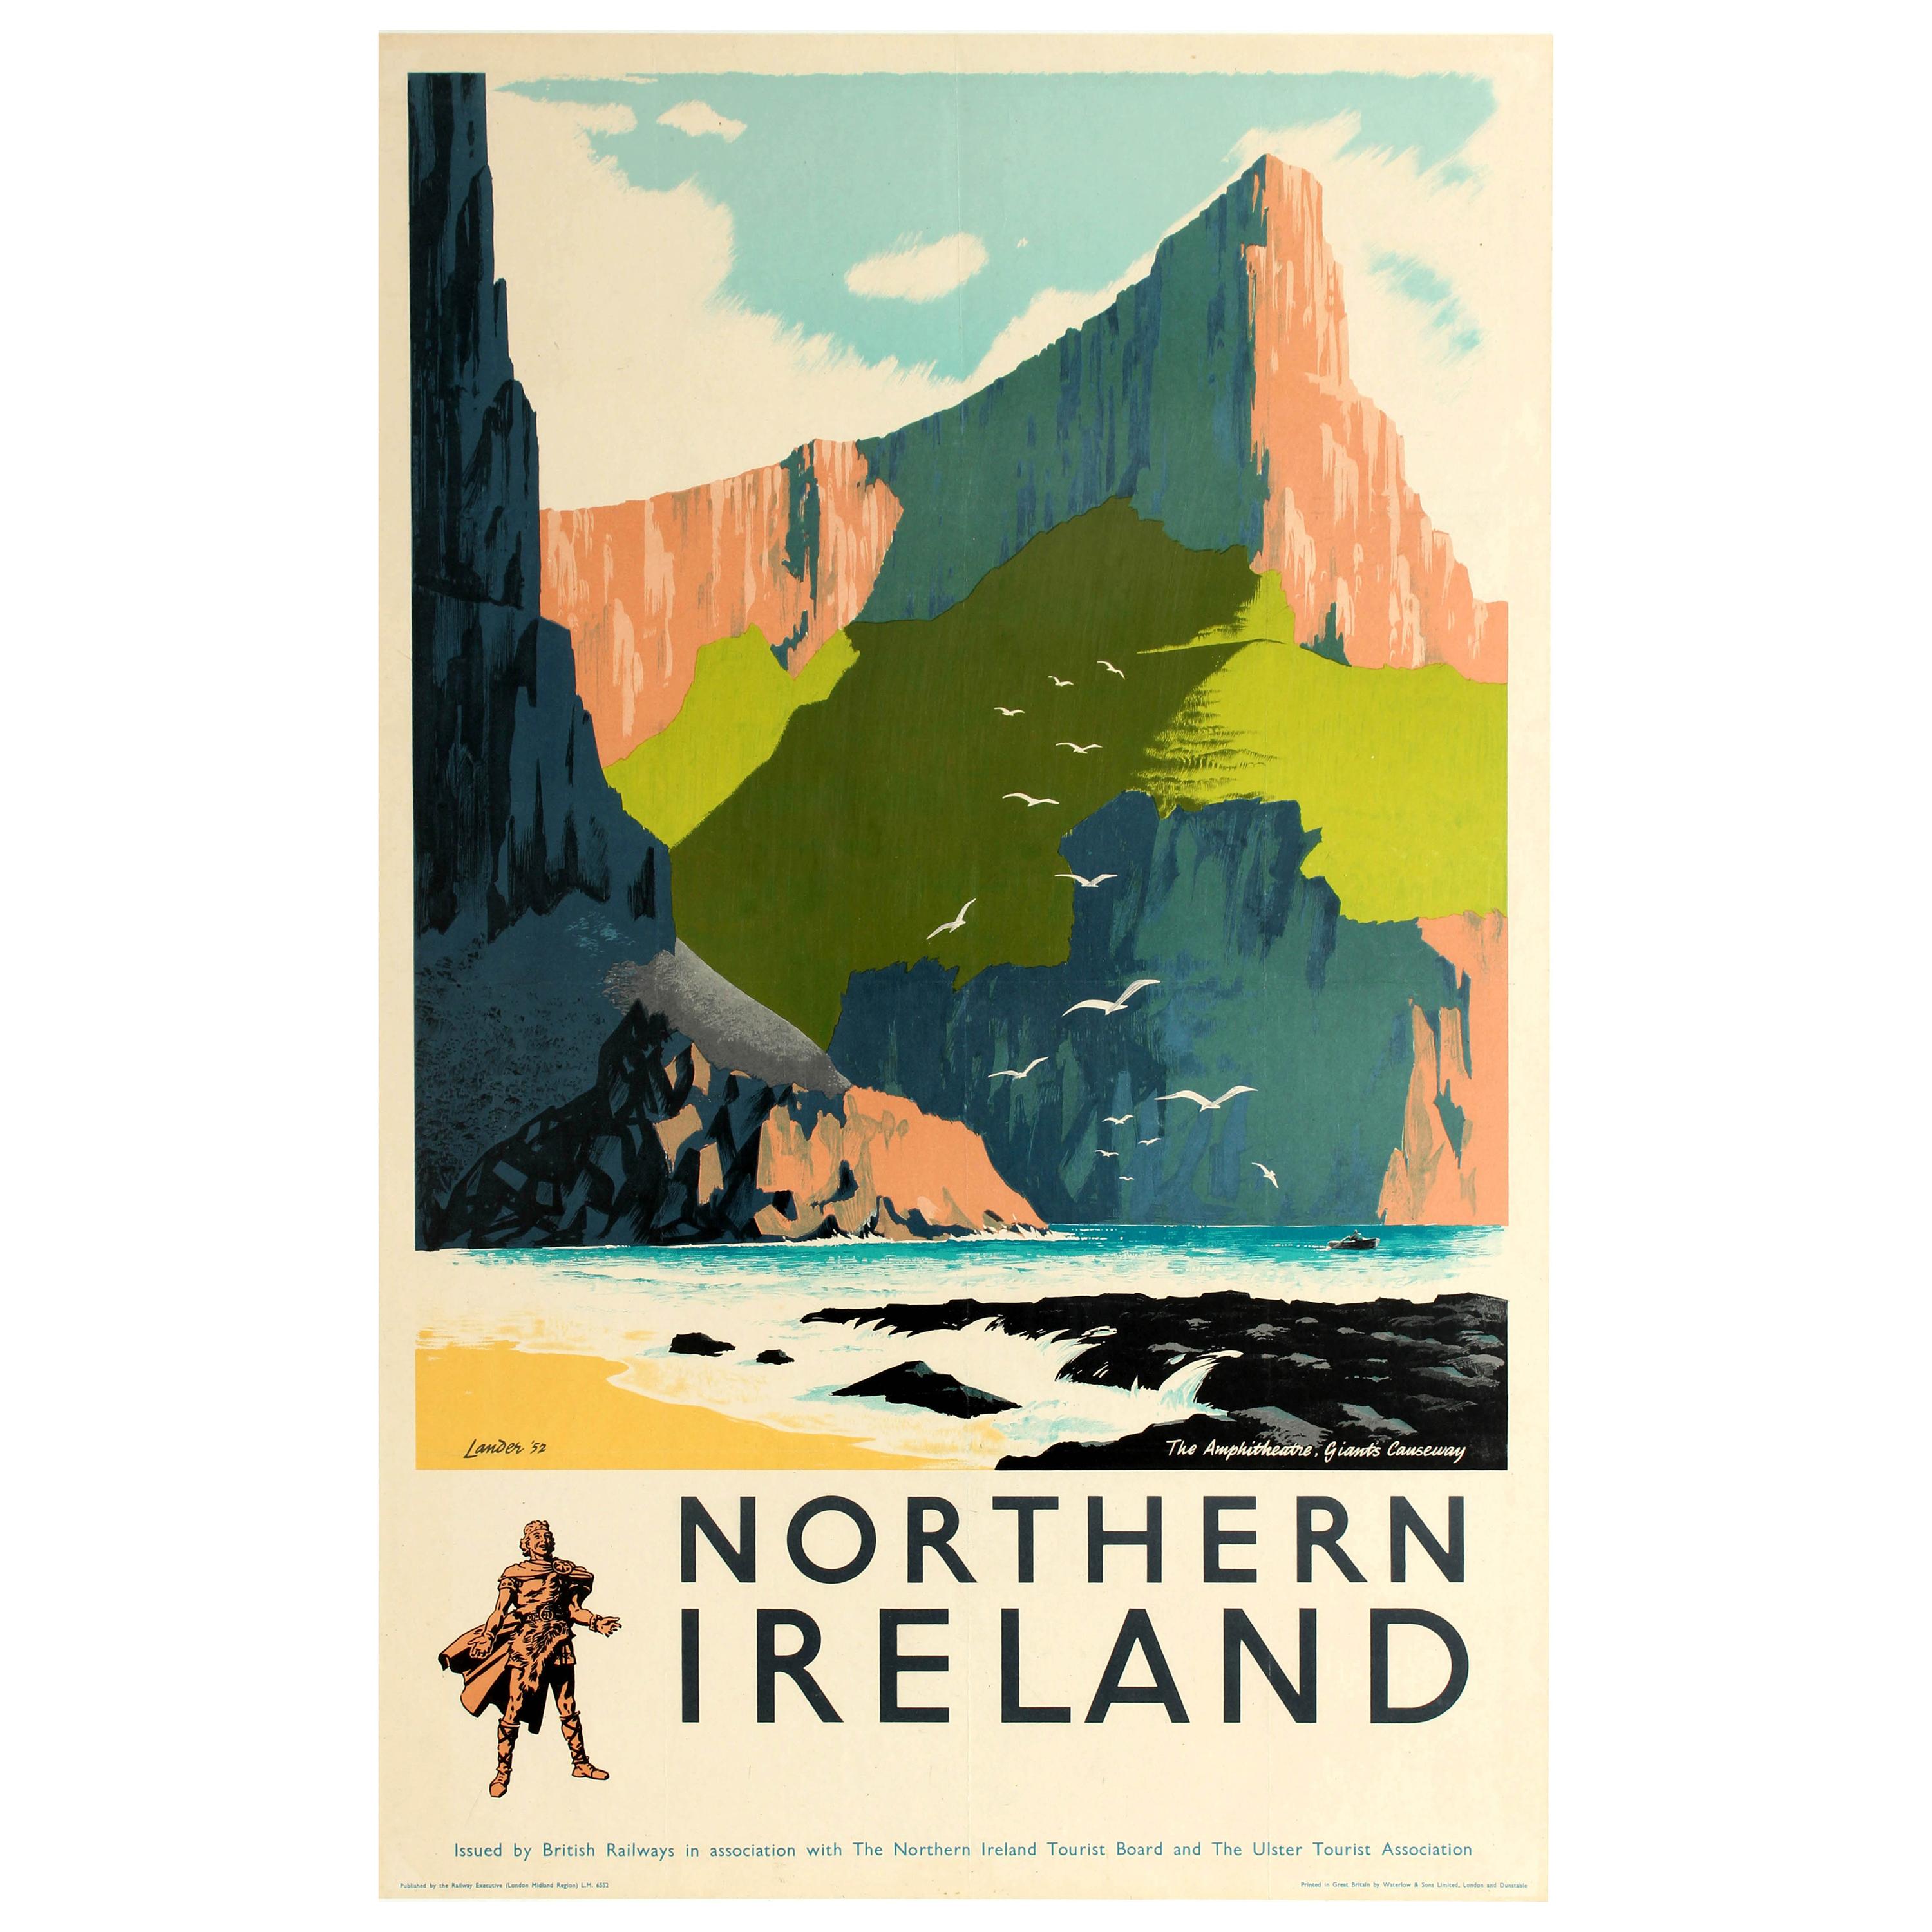 Original Vintage Travel Poster Northern Ireland Giant's Causeway Amphitheatre